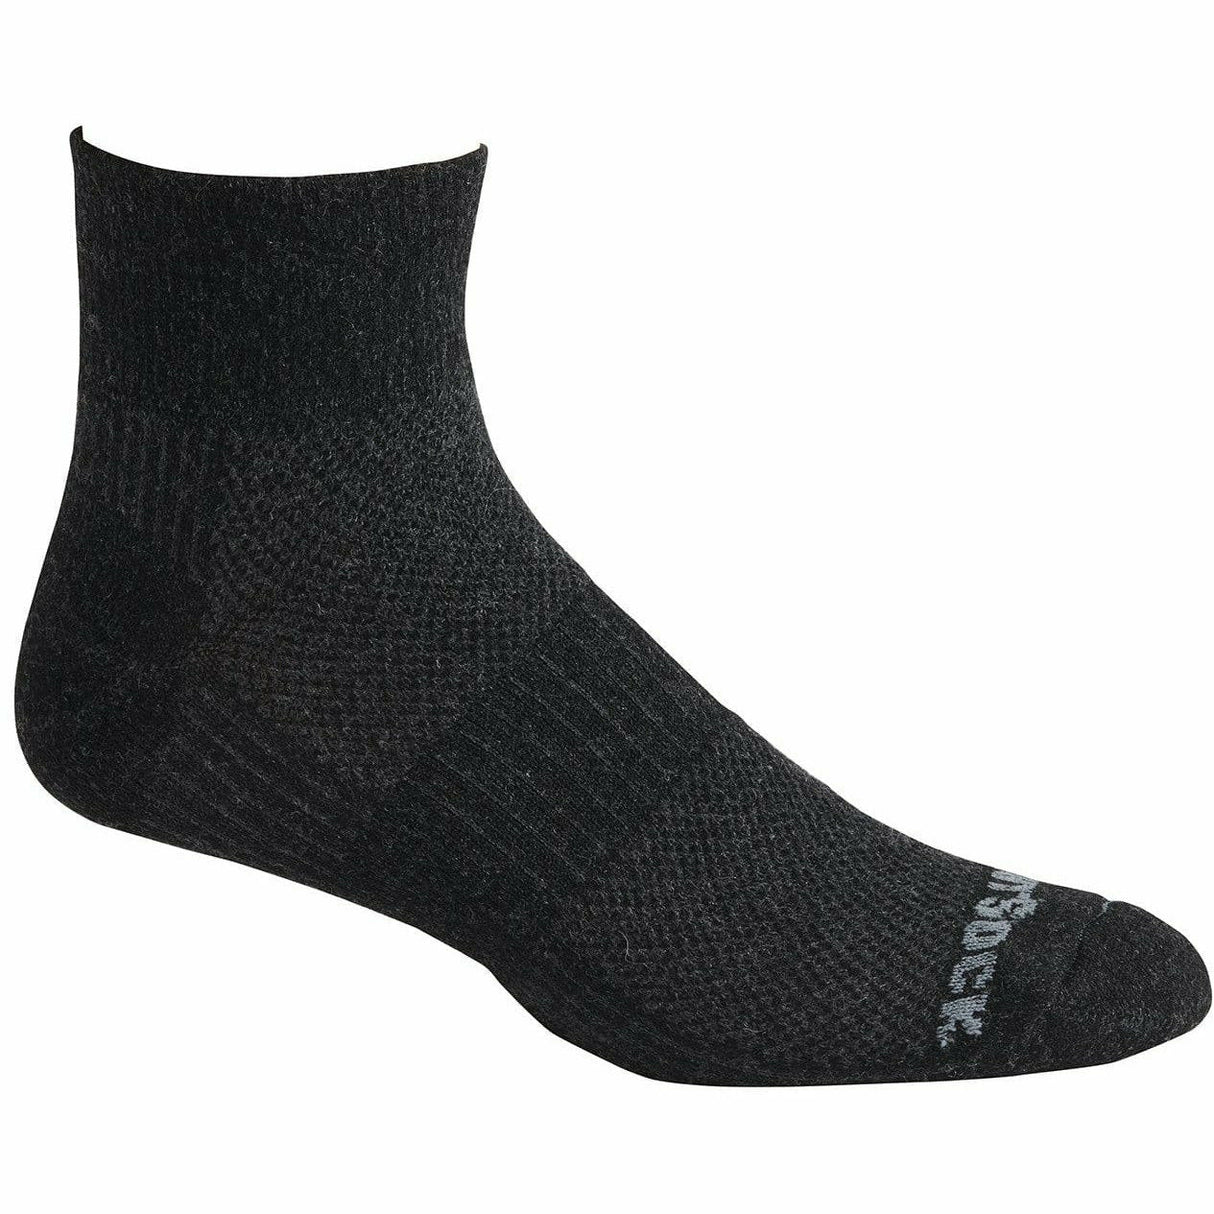 Wrightsock Double-Layer ECO Winter Run Quarter Socks  -  Small / Black